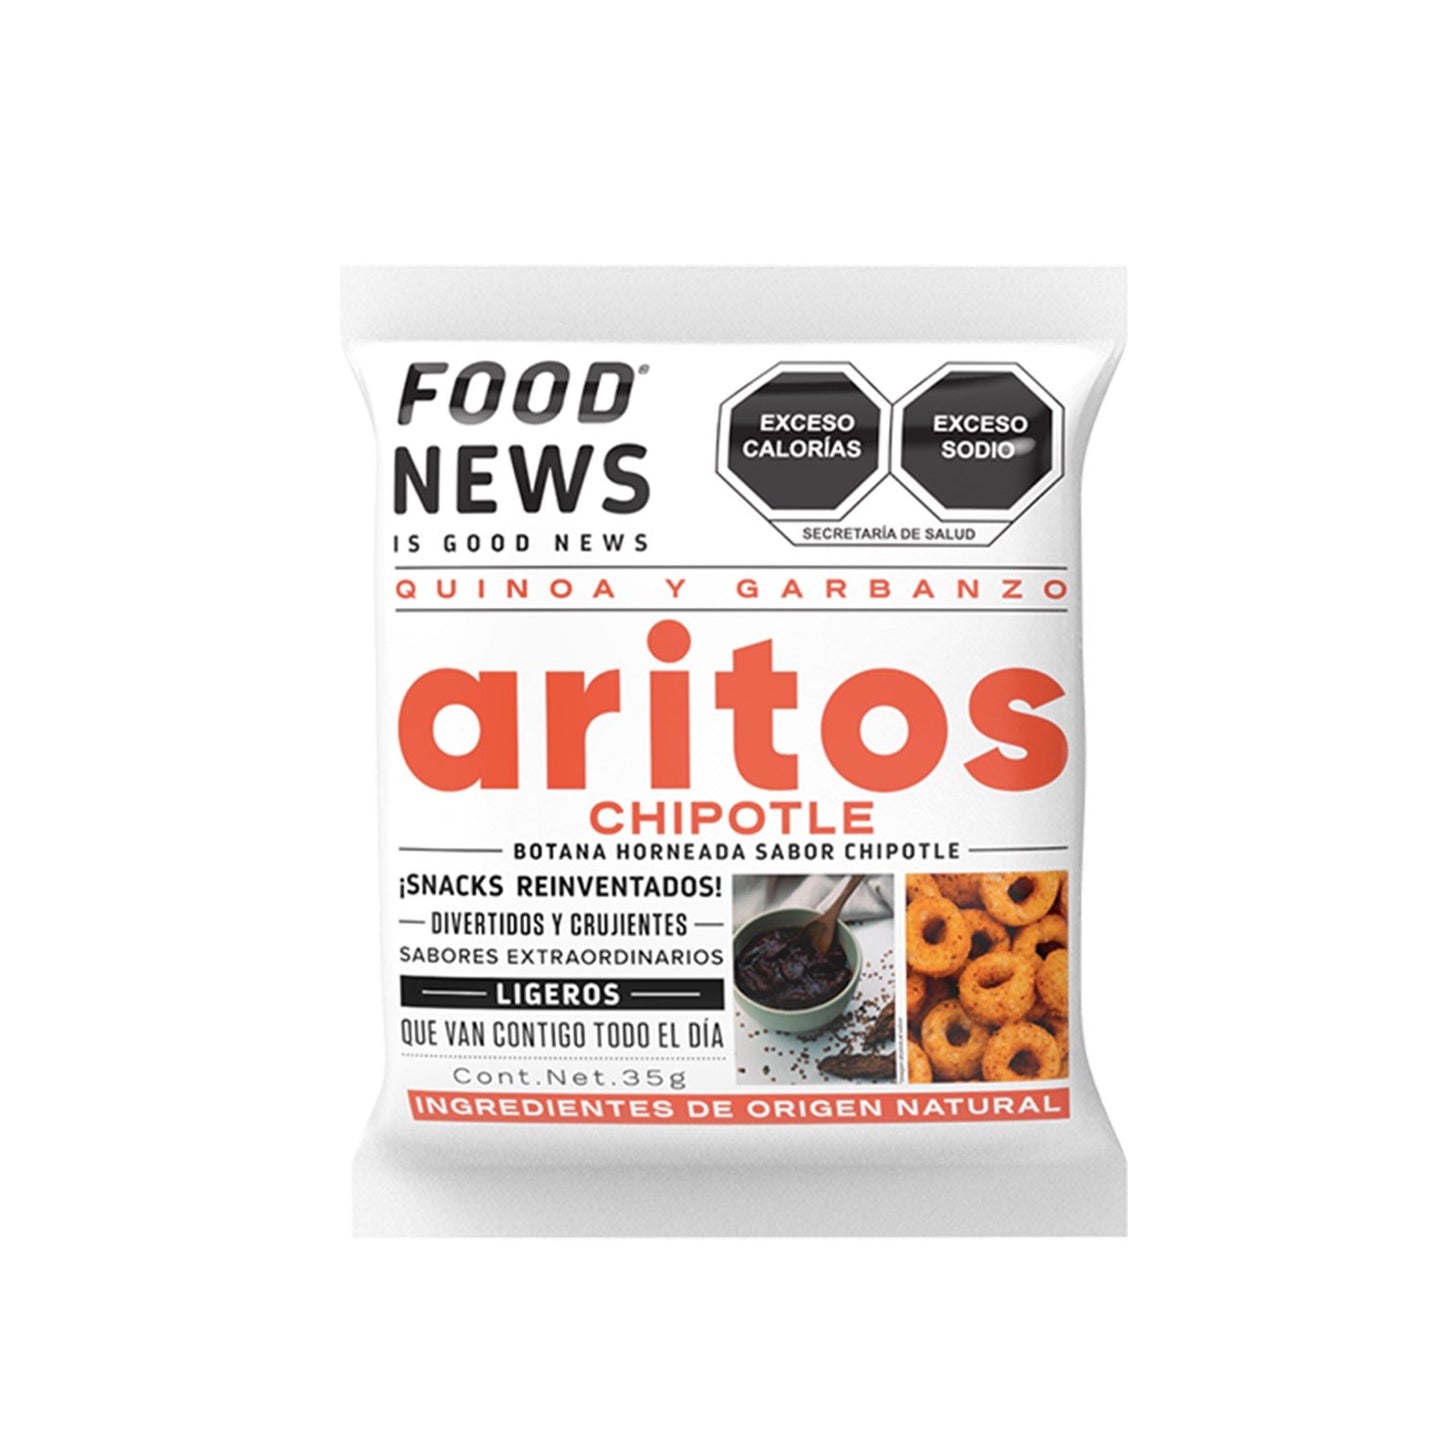 FOOD NEWS ARITOS CHIPOTLE 35 G